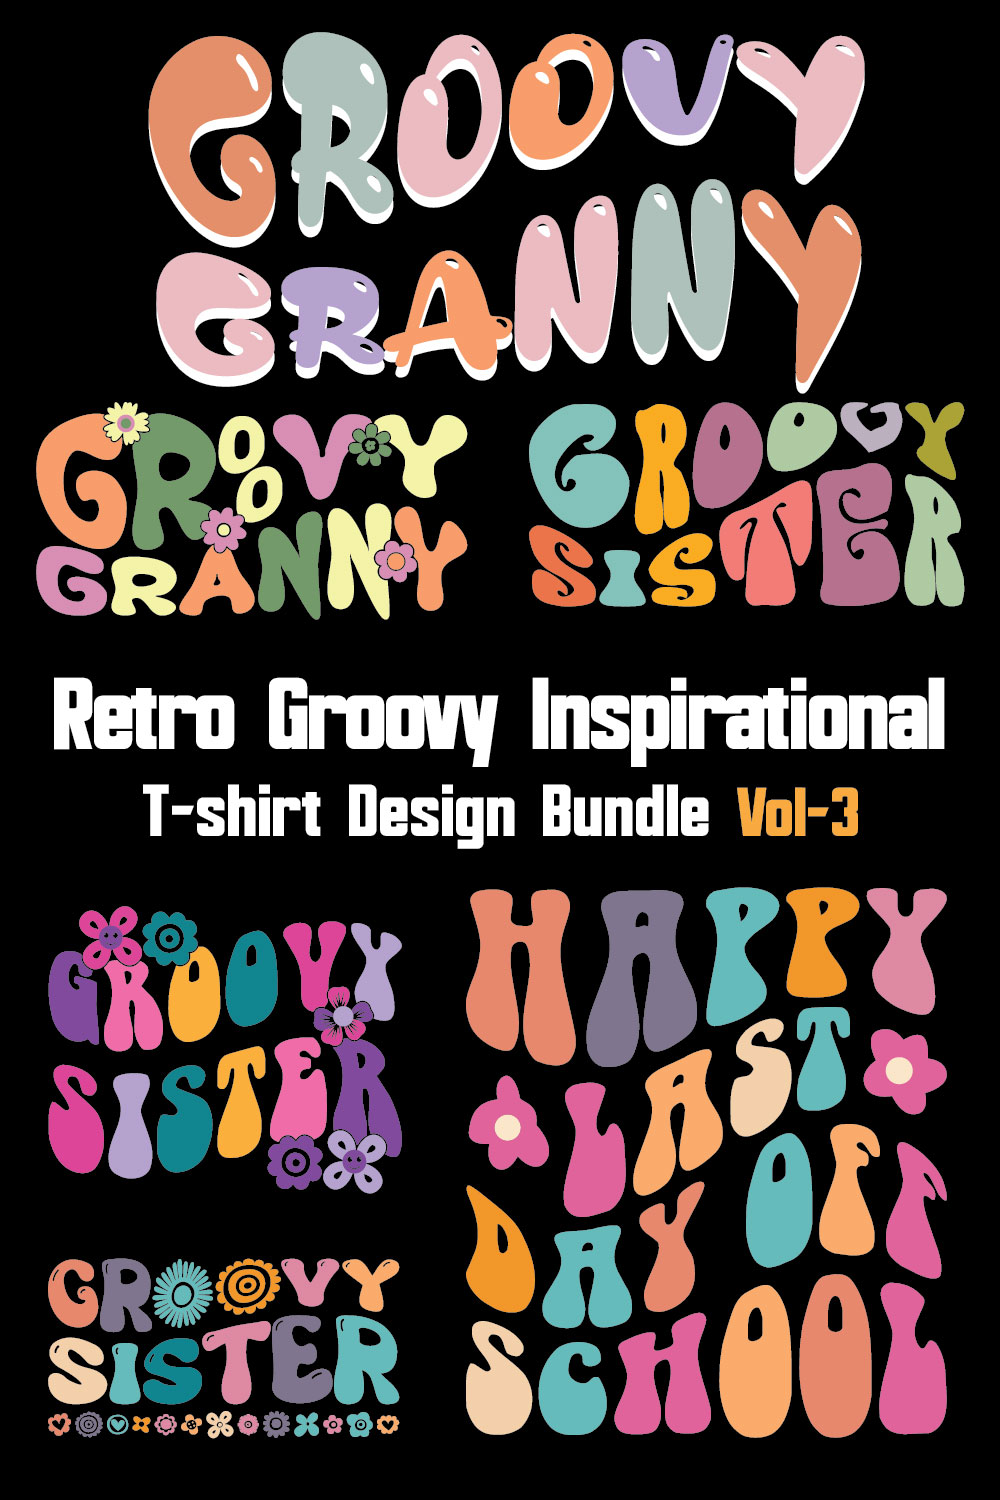 Retro Groovy Inspirational T-shirt Design Bundle Vol-3 pinterest preview image.